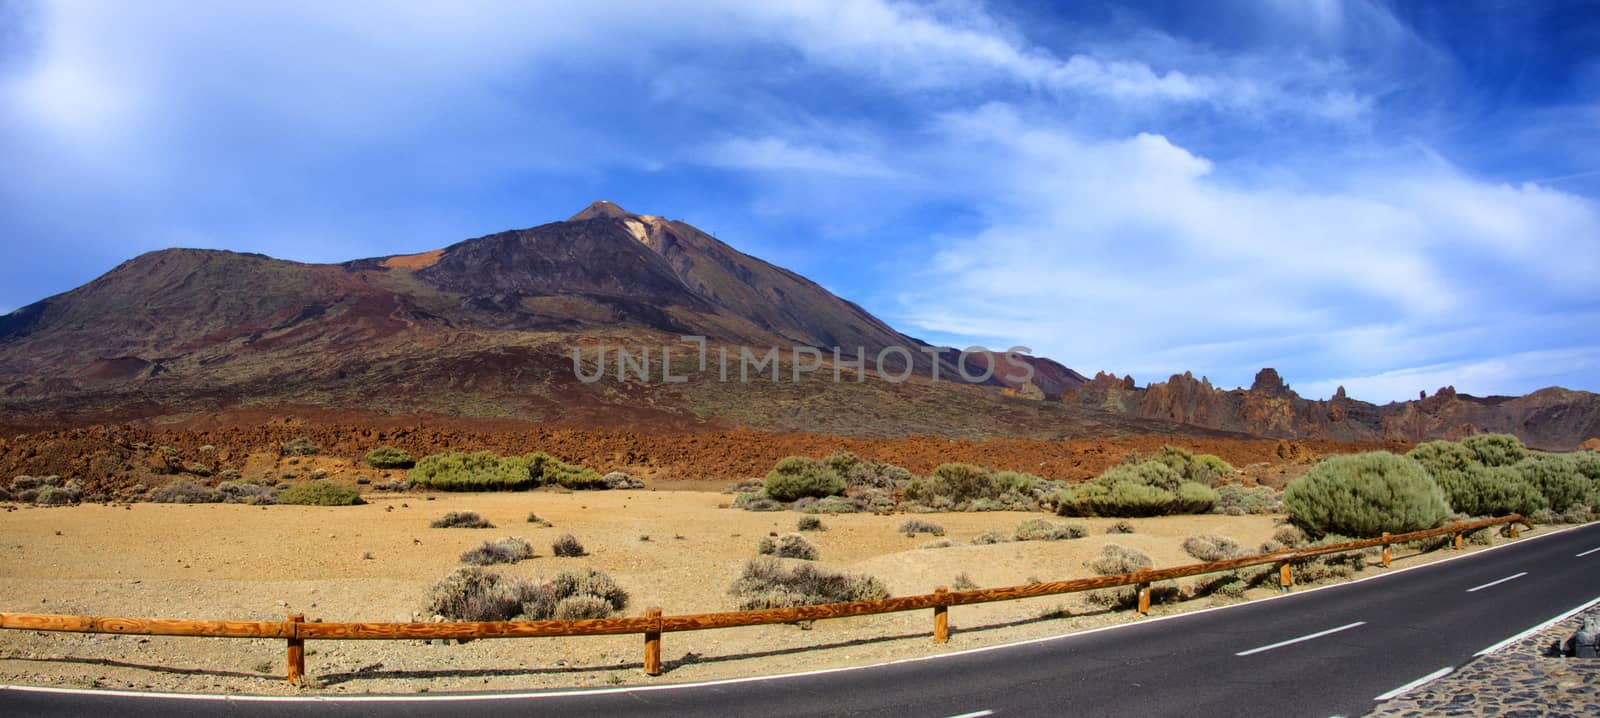 Sand Desert with blue sky, Panorama, Teide volcano, Tenerife, Canarian Islands by Eagle2308